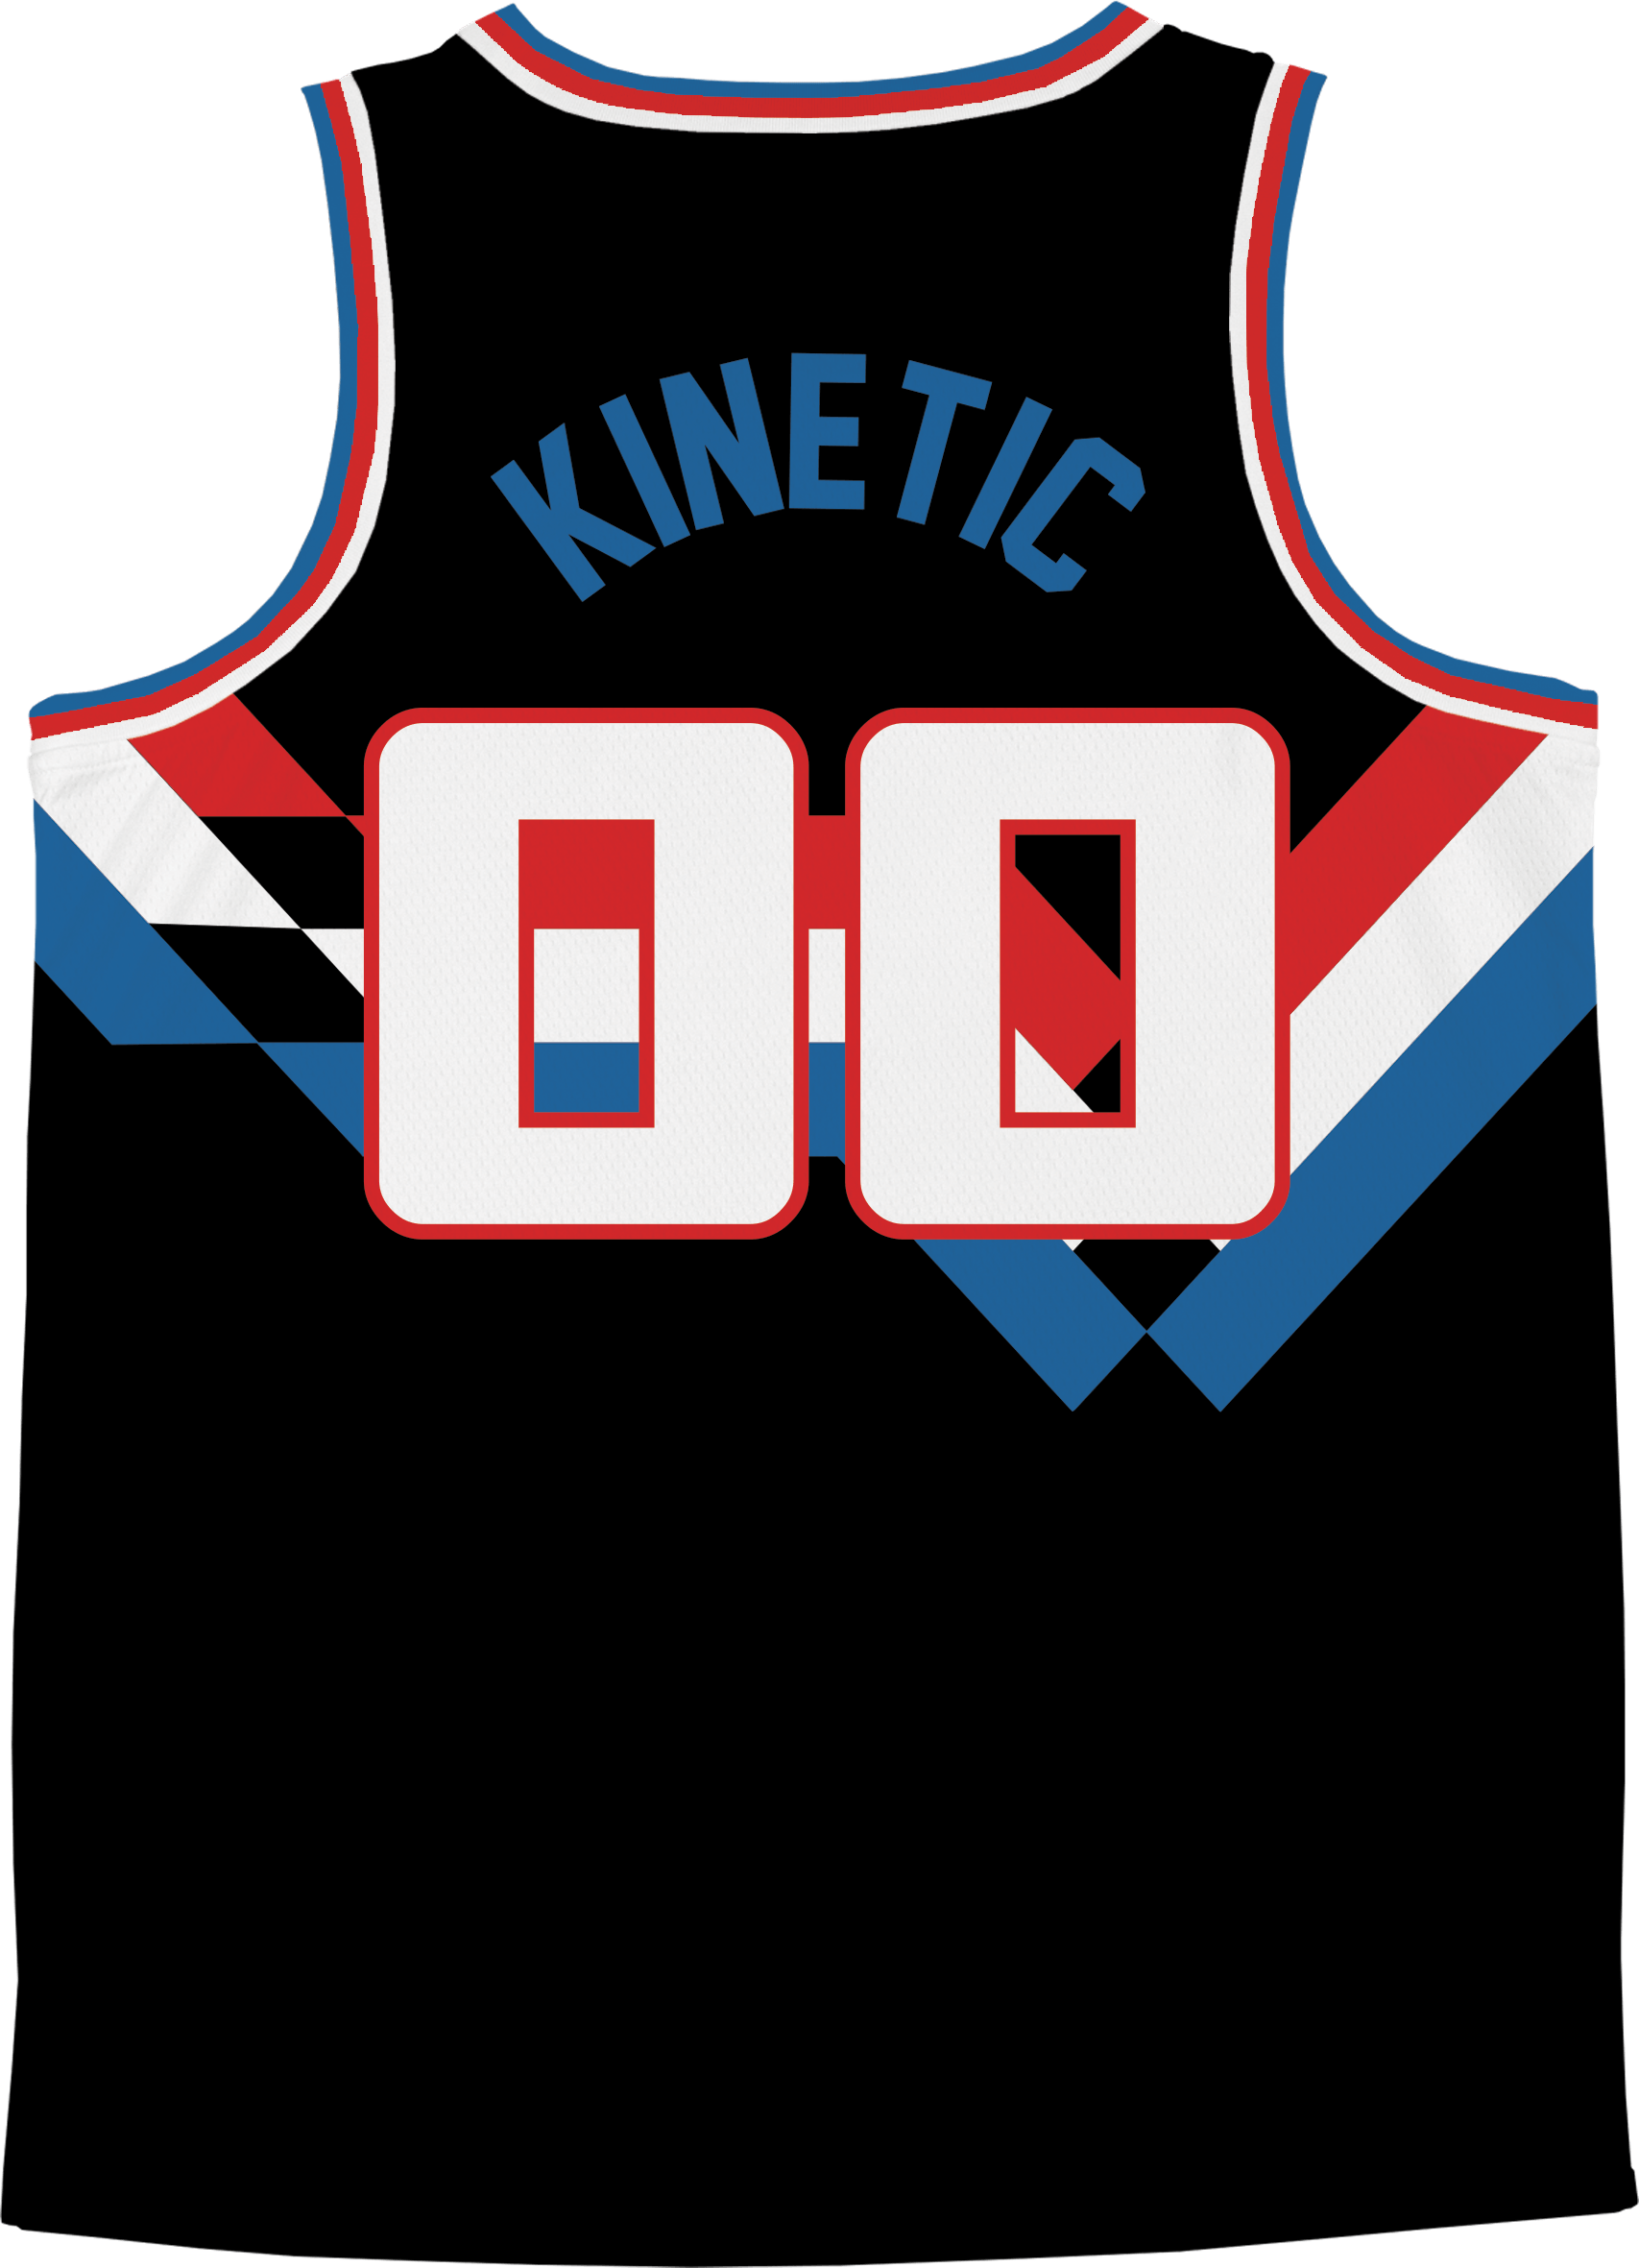 Delta Chi - Victory Streak Basketball Jersey - Kinetic Society